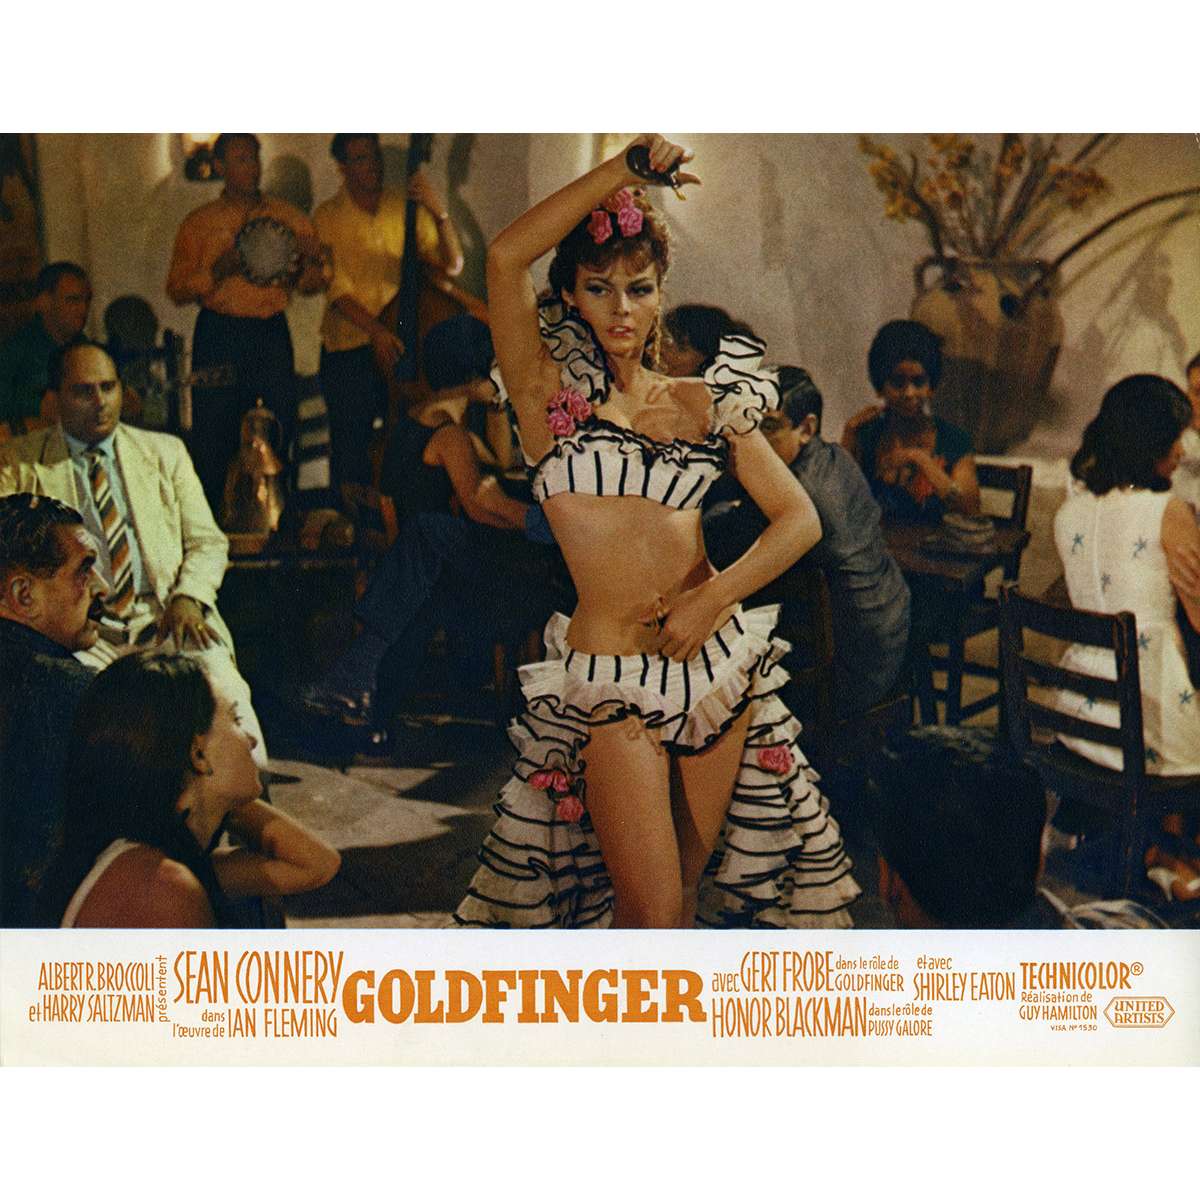 goldfinger-original-lobby-card-n04-9x12-in-1964-guy-hamilton-sean-connery.jpg